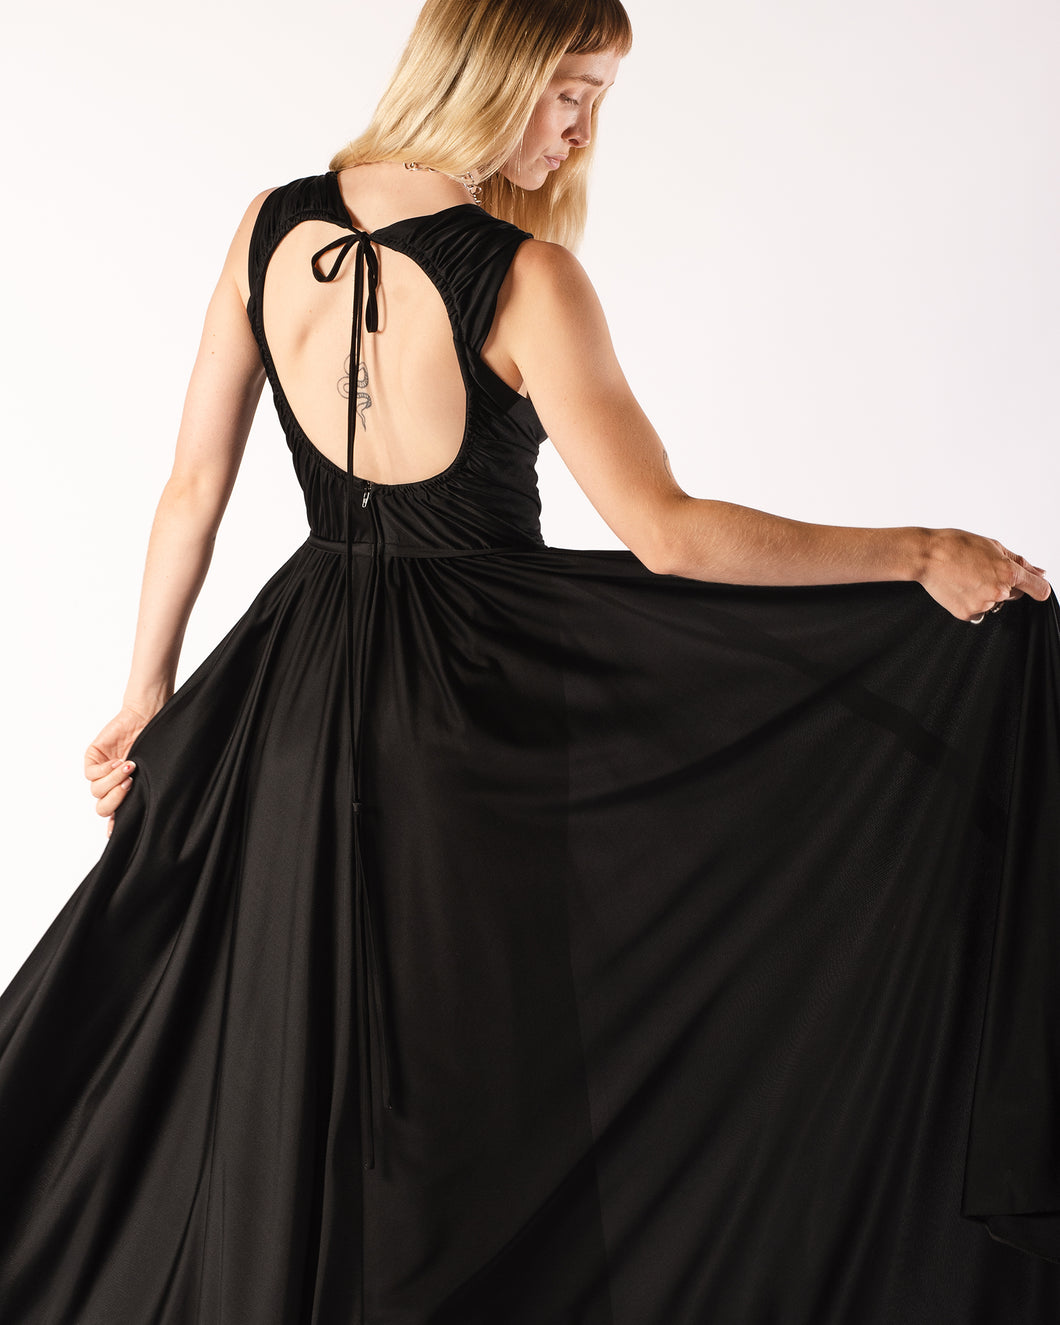 Incredible 70s backlesss Black Jersey full-length dress